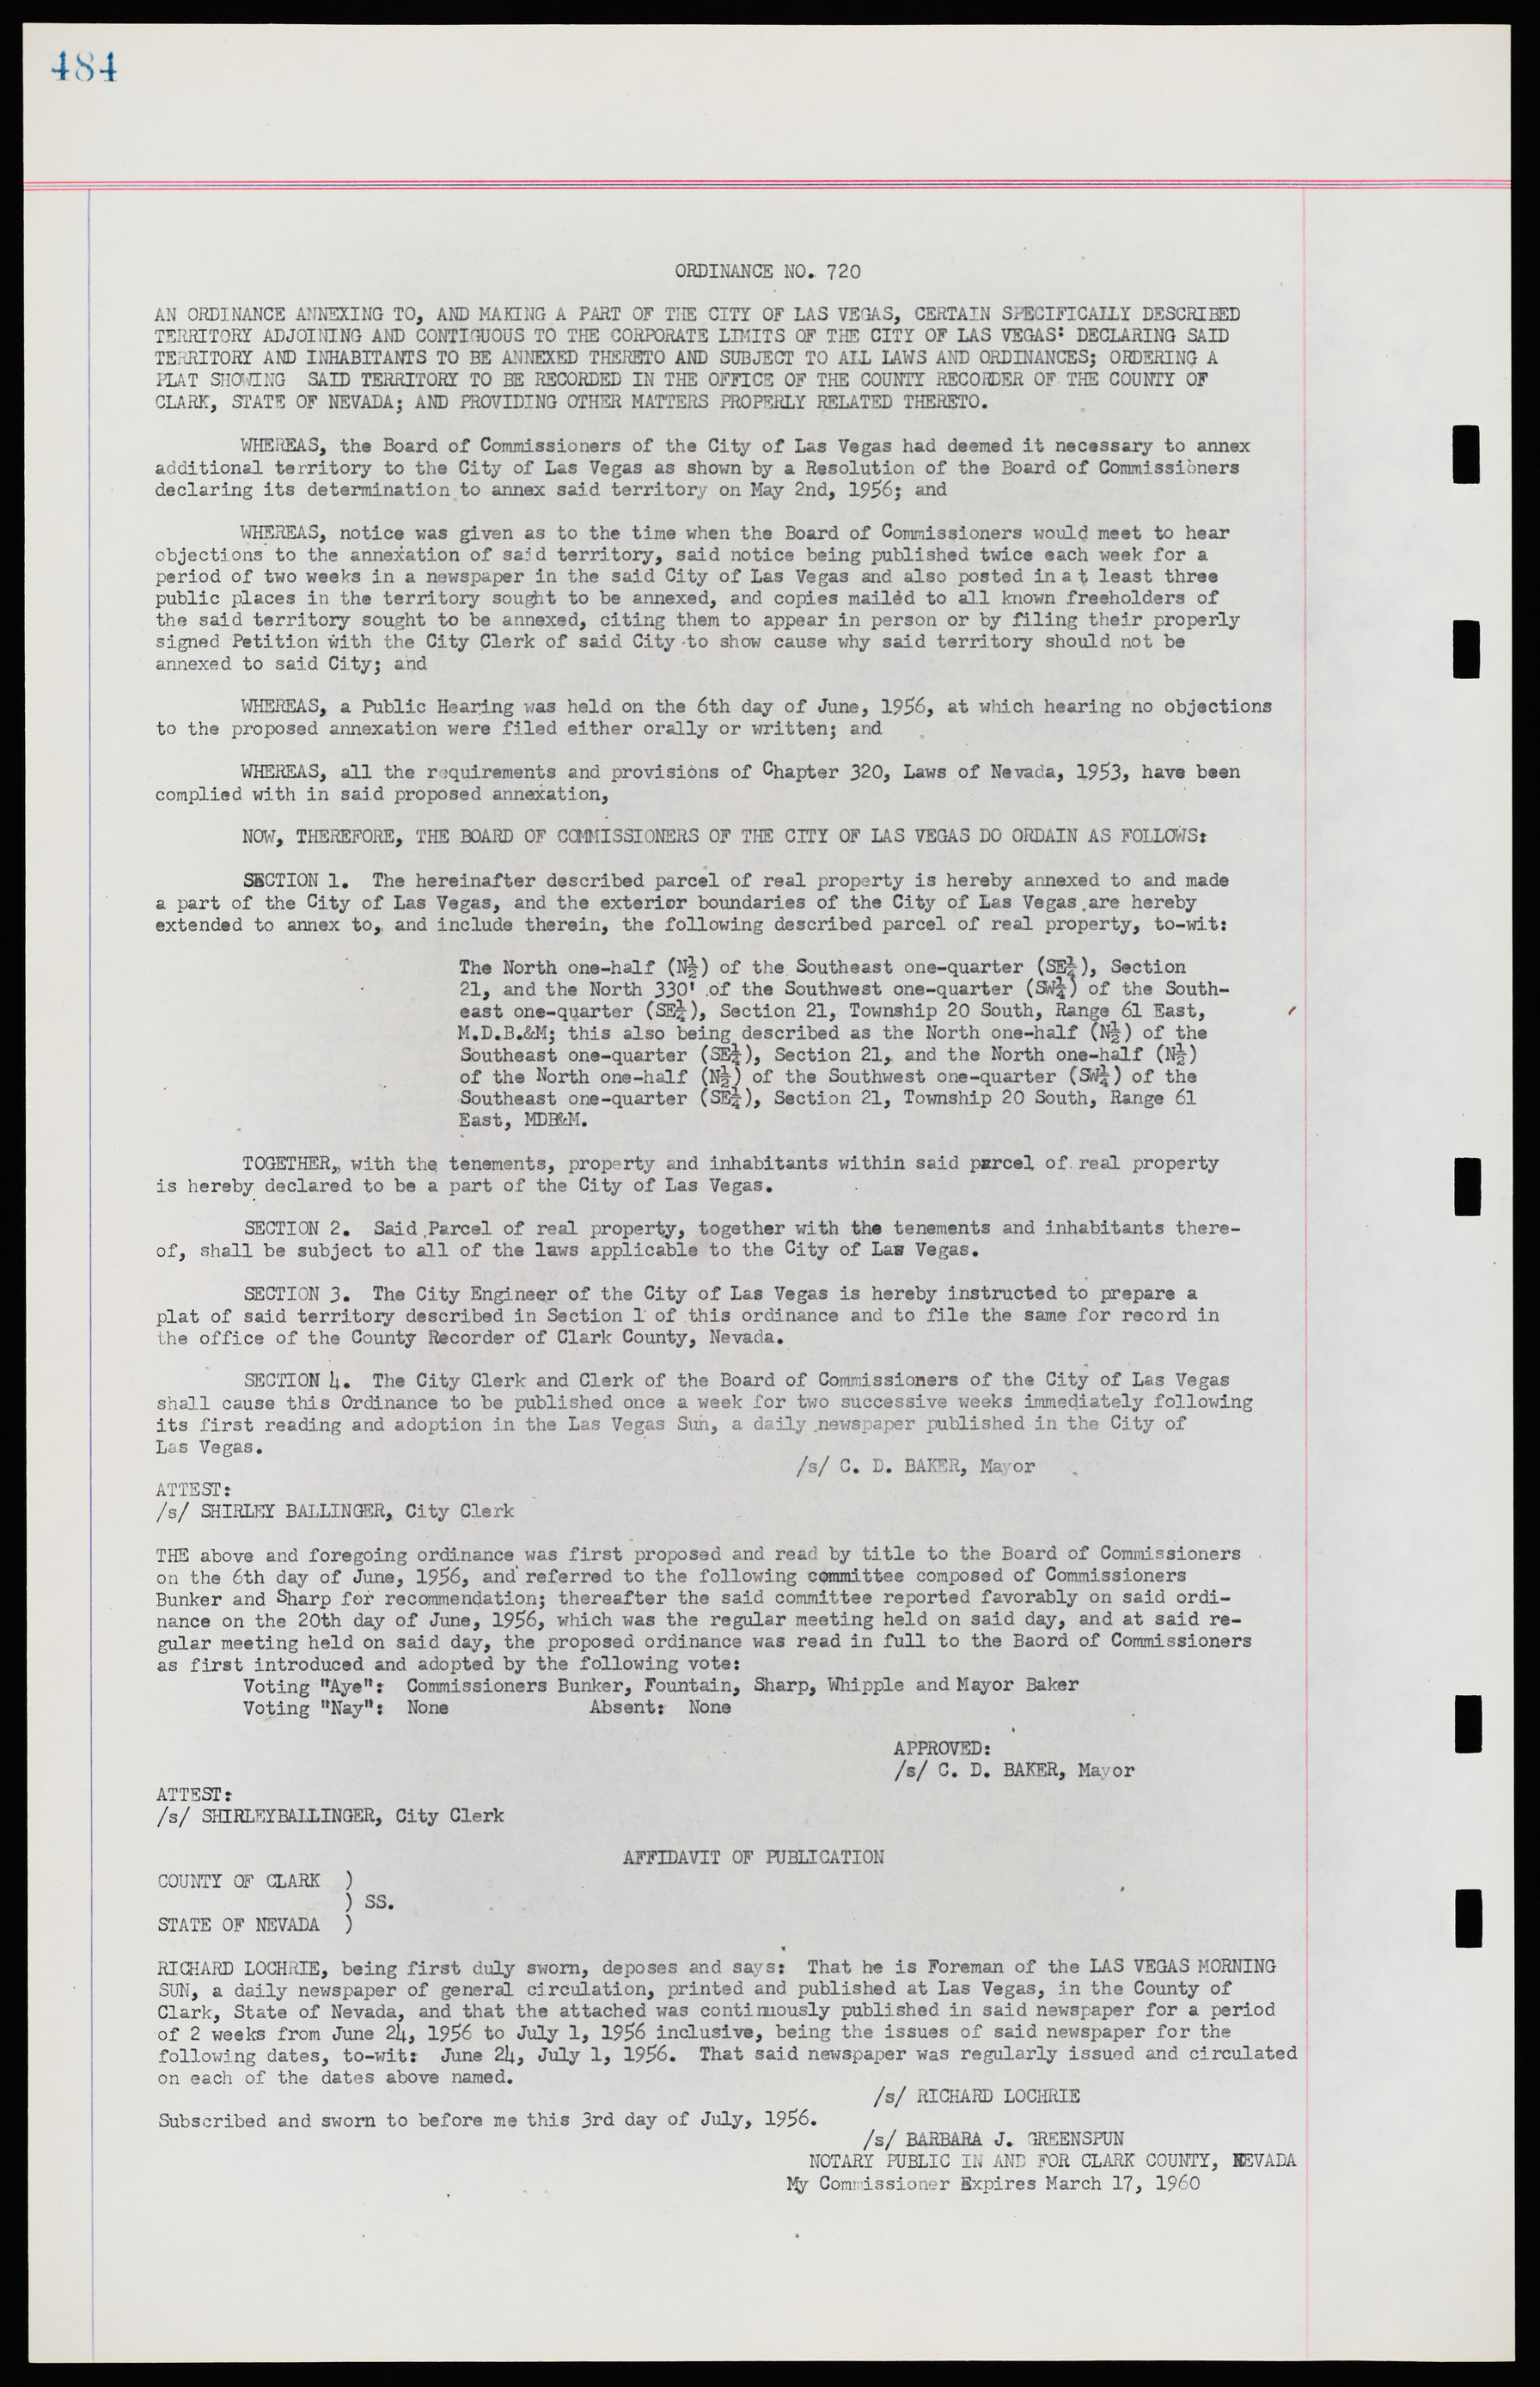 Las Vegas City Ordinances, November 13, 1950 to August 6, 1958, lvc000015-492